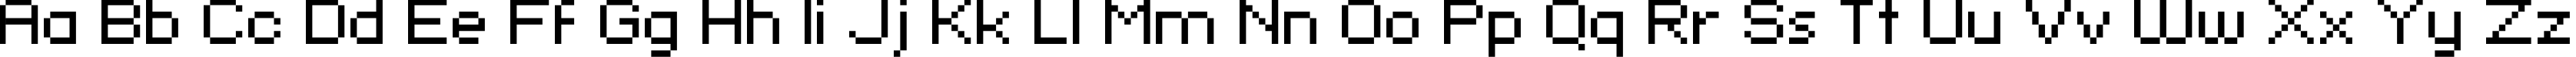 Пример написания английского алфавита шрифтом KLMN Flash Pix